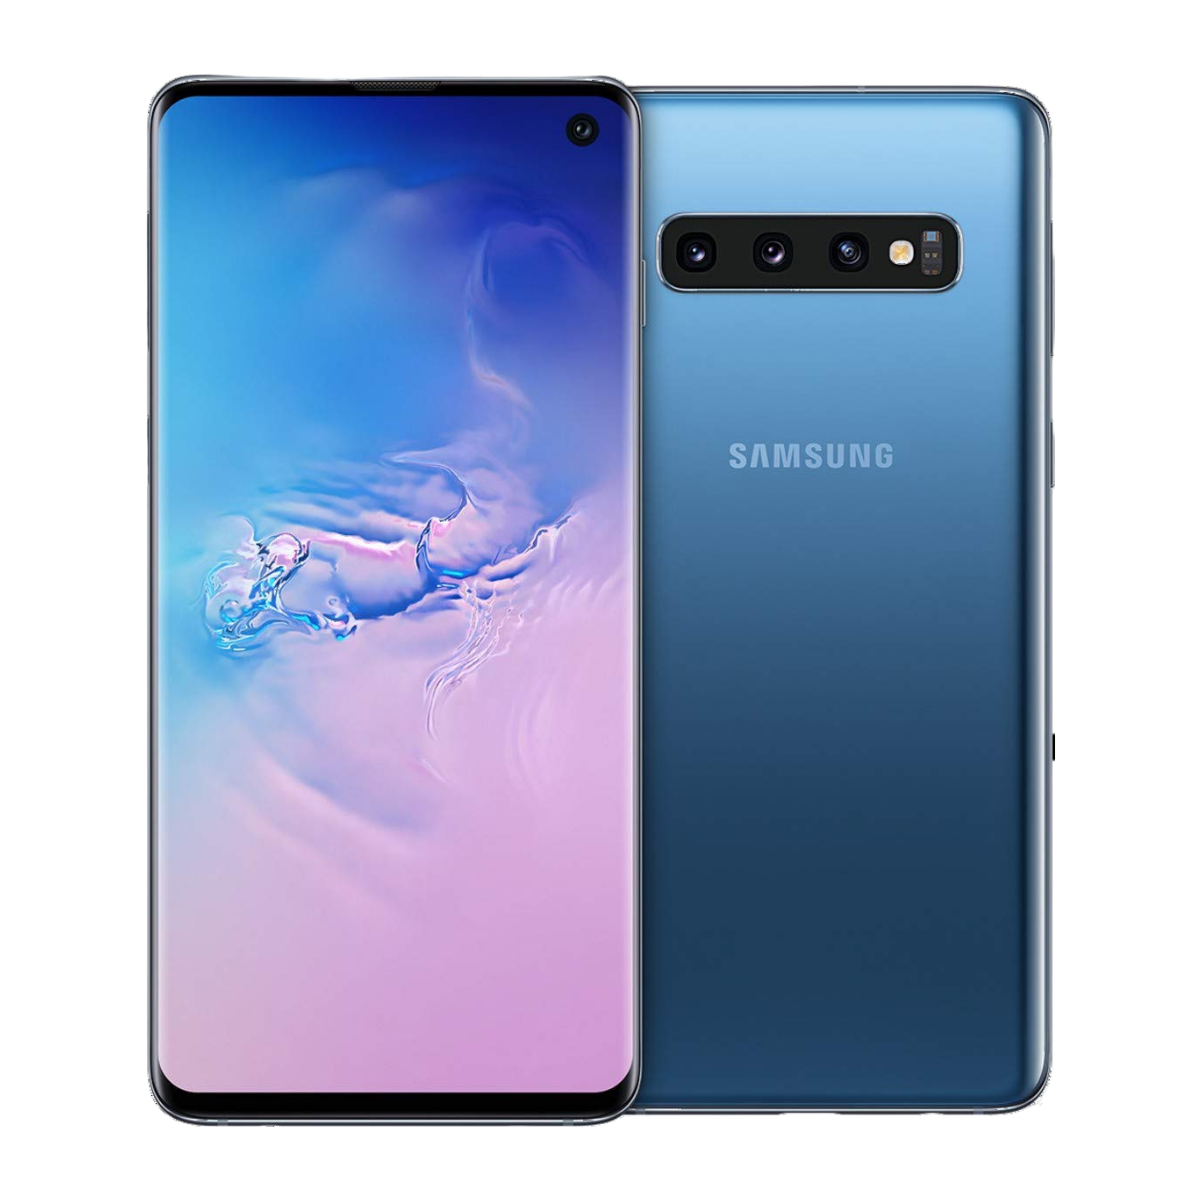 Sim Free Samsung Galaxy S10 128GB Unlocked Mobile Phone - Prism Blue